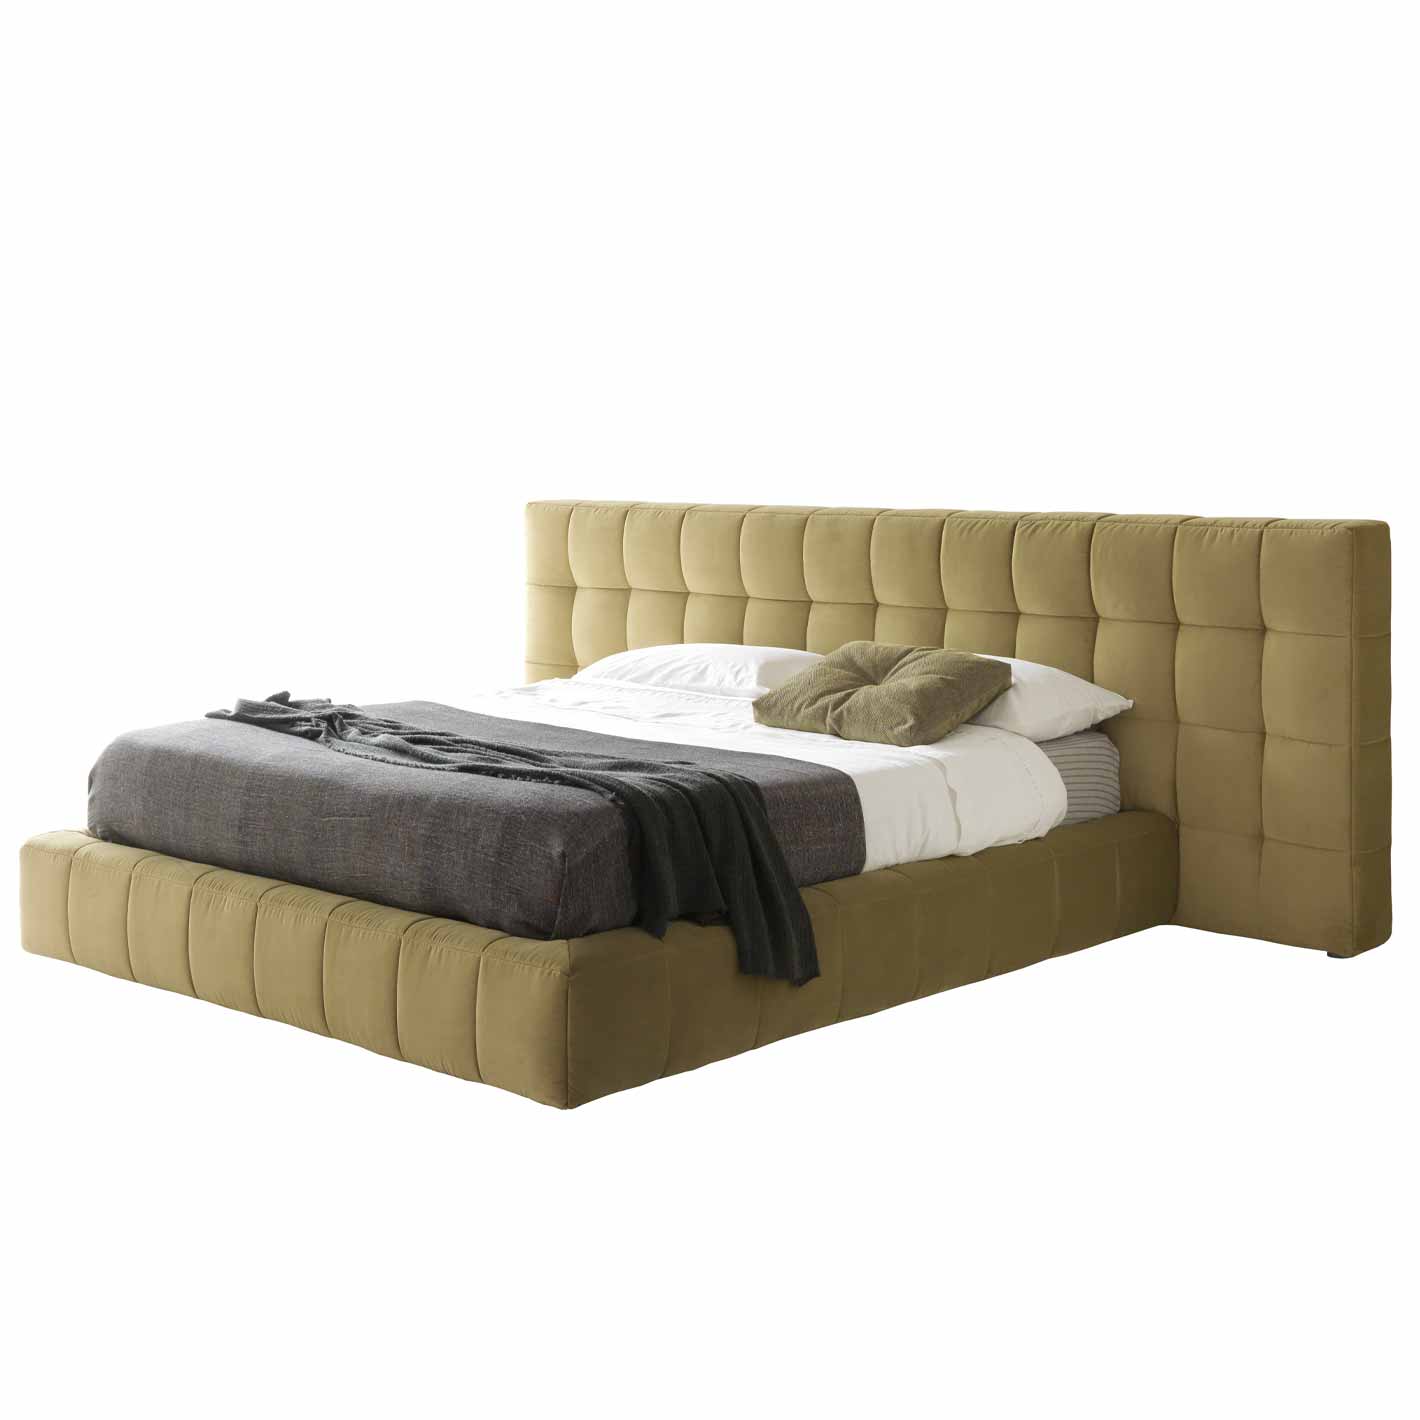 Betten mit Bettkasten - TERENCE XL Bett